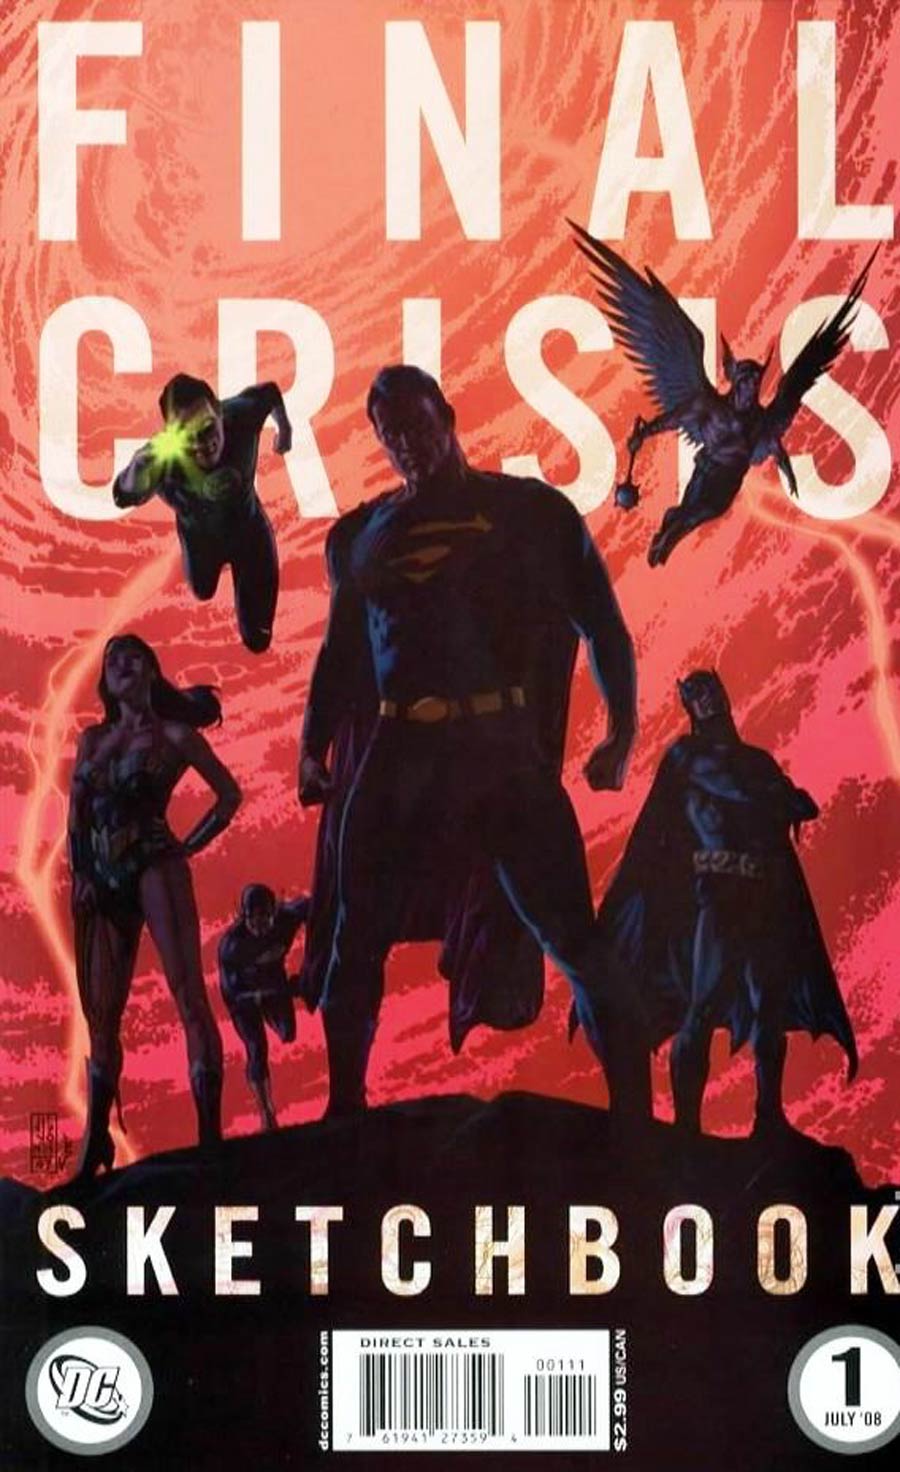 Final Crisis Sketchbook